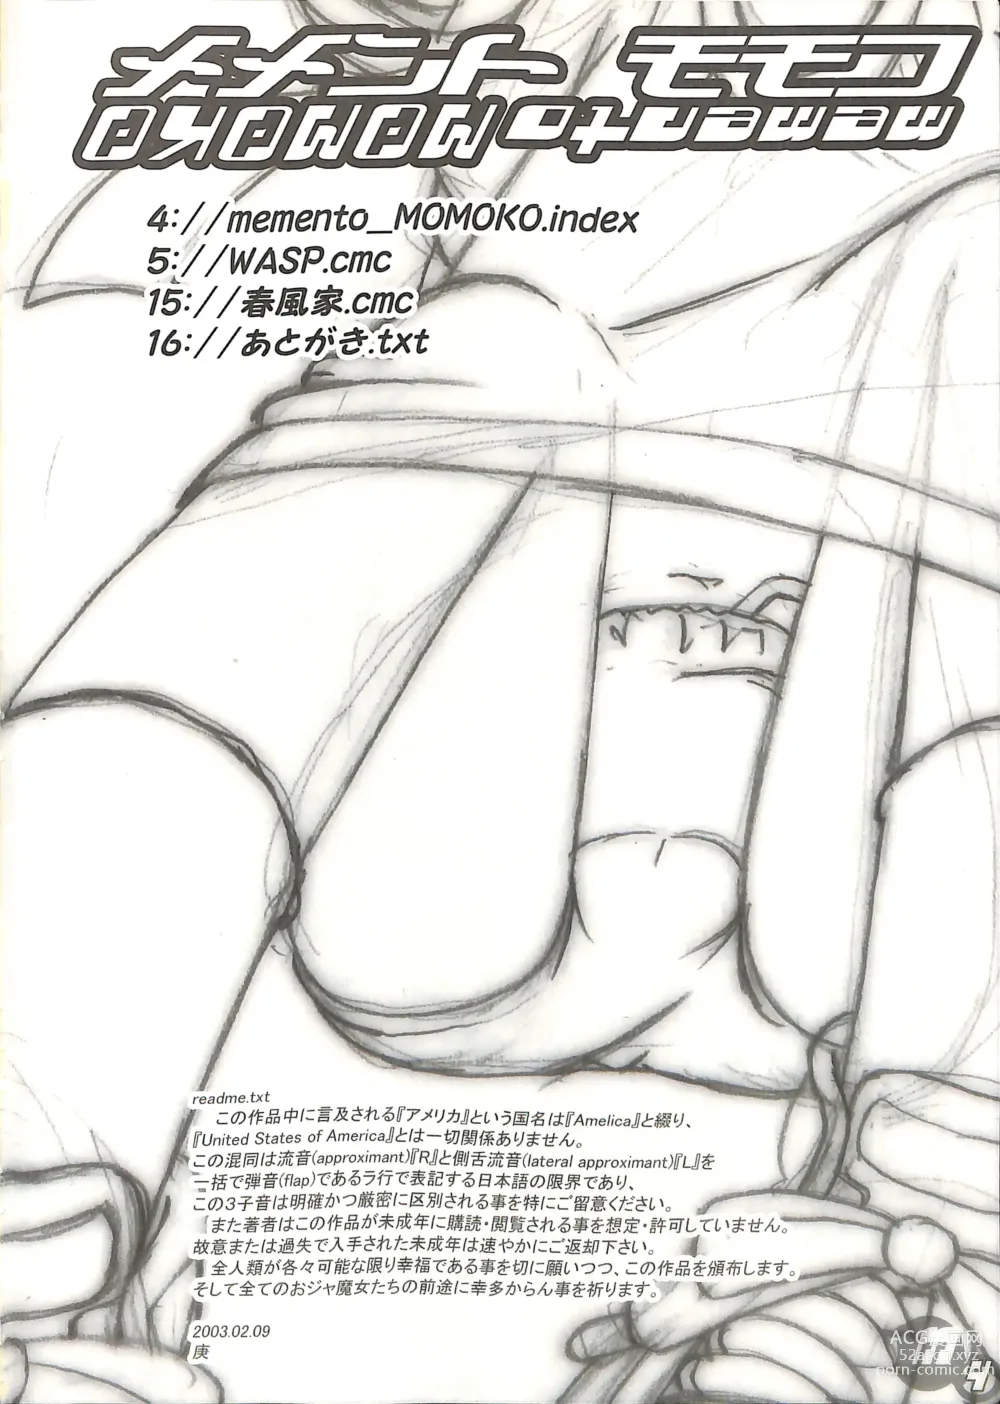 Page 4 of doujinshi memento MOMOKO